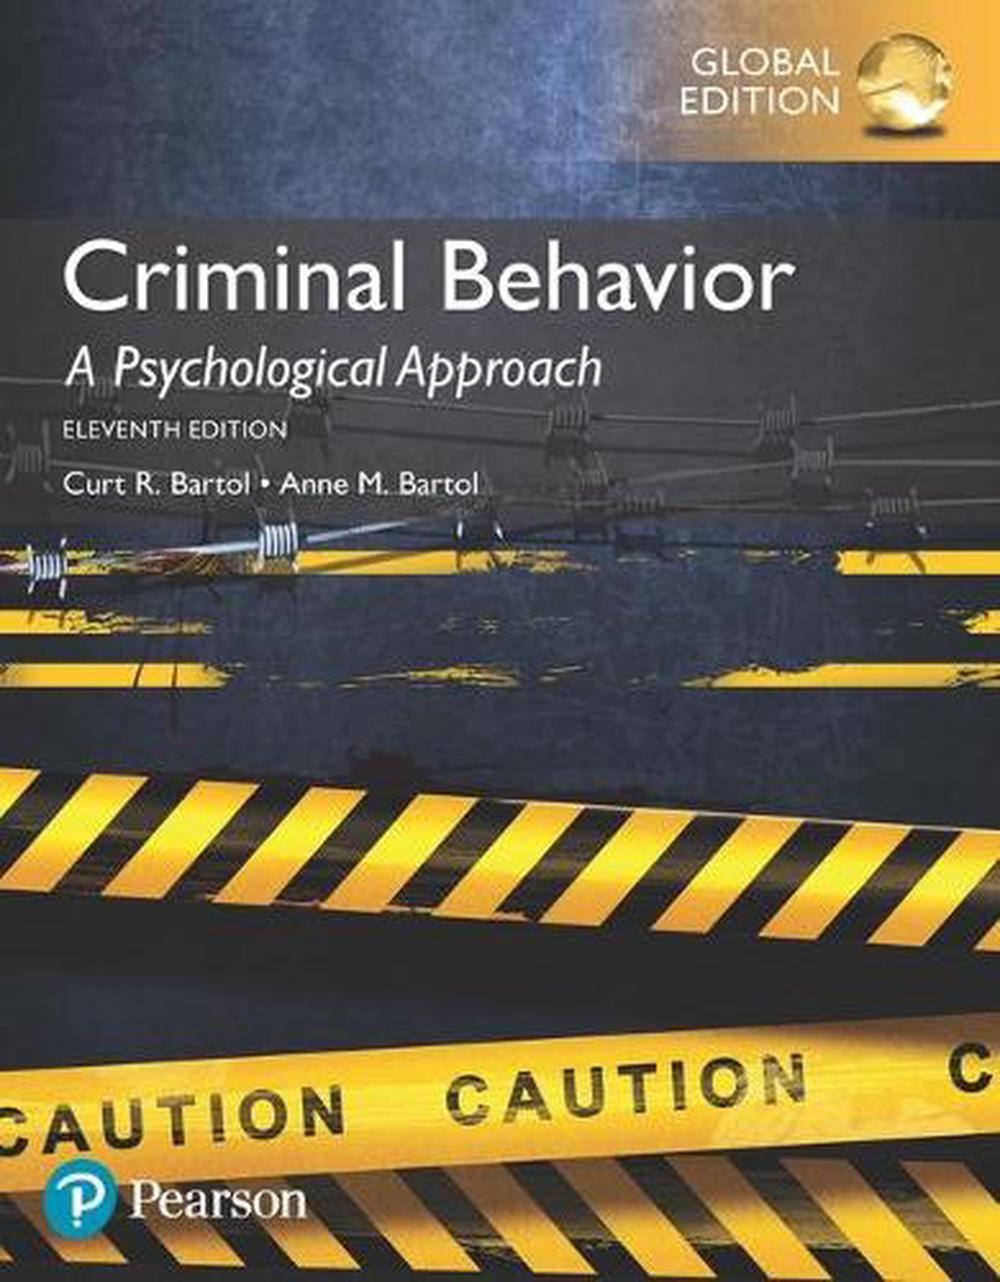 research about criminal behavior